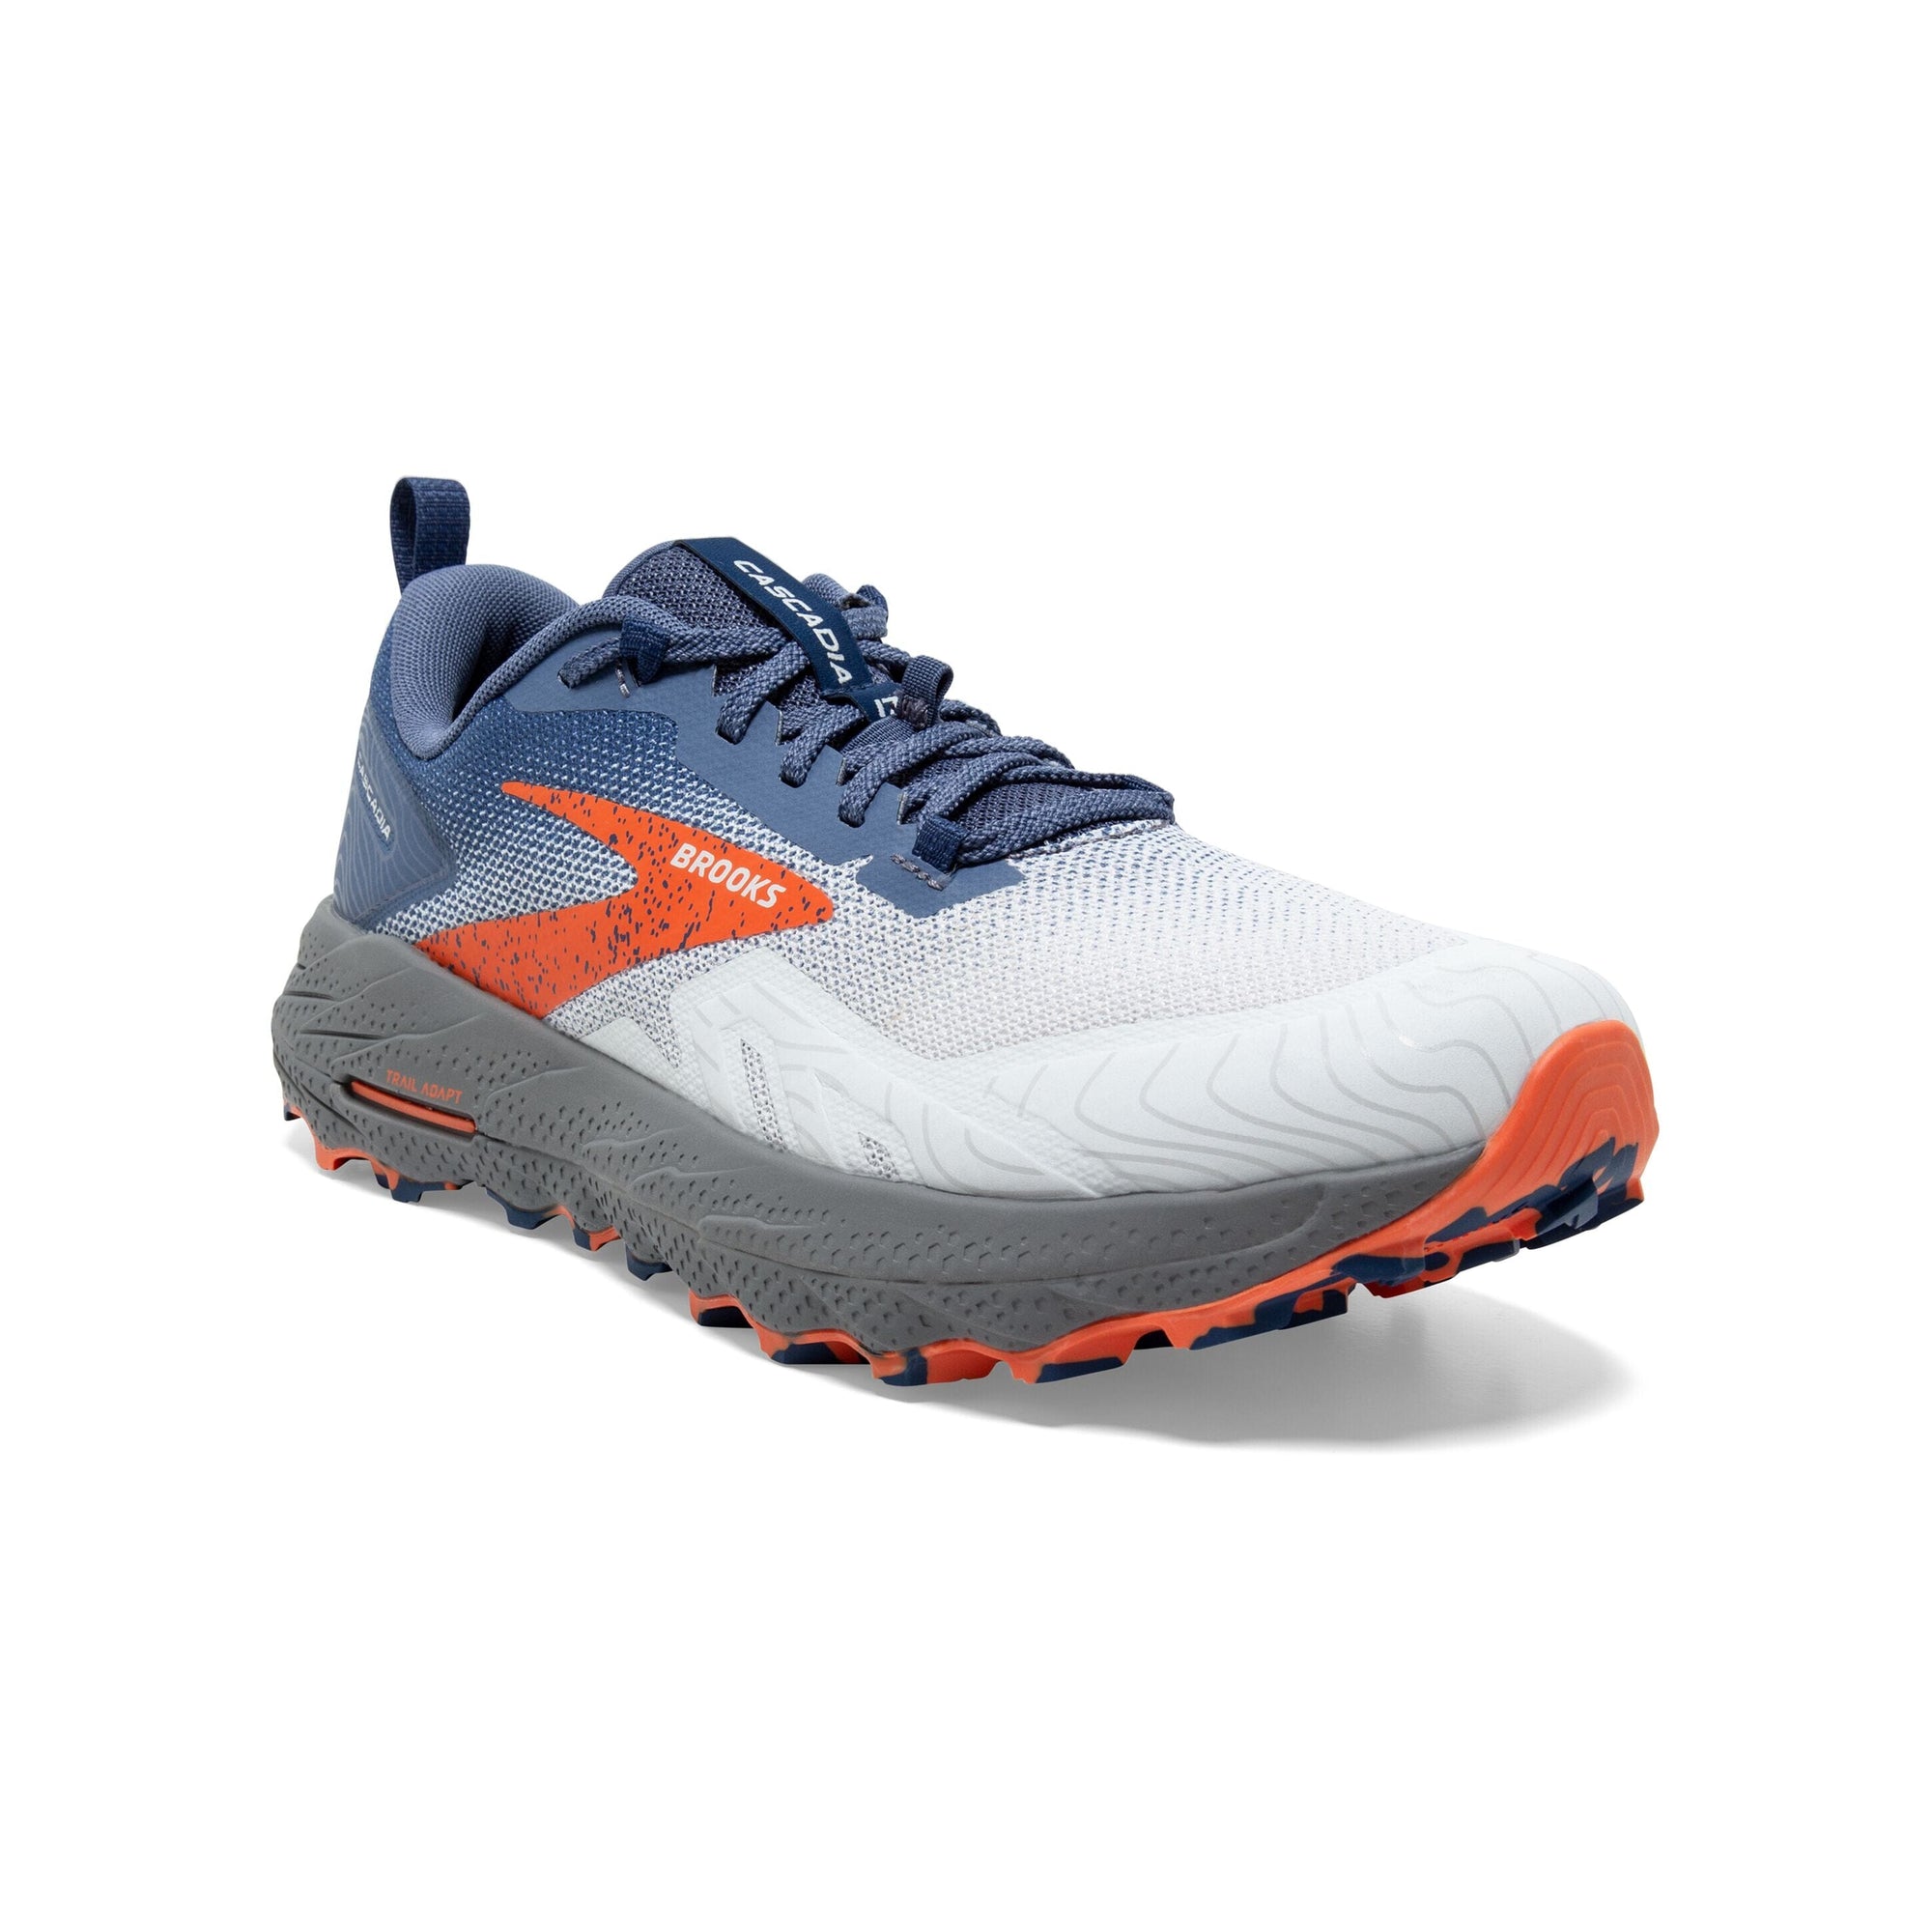 Brooks Men's Cascadia 17 Trail Running Shoes Blue/Navy/Firecracker US 8.5 Medium